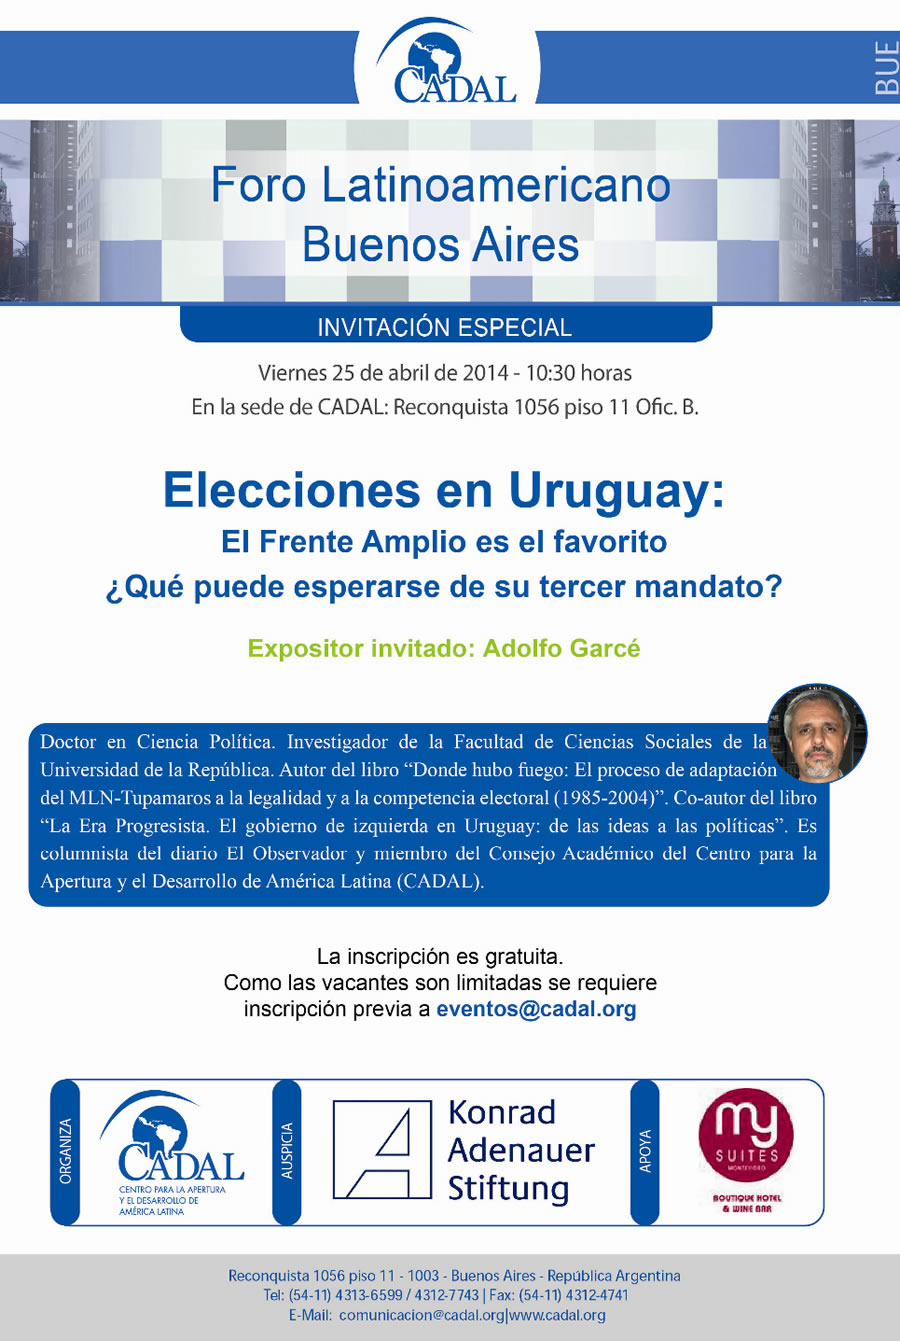 Foro Latinoamericano Buenos Aires - 25 de abril de 2014